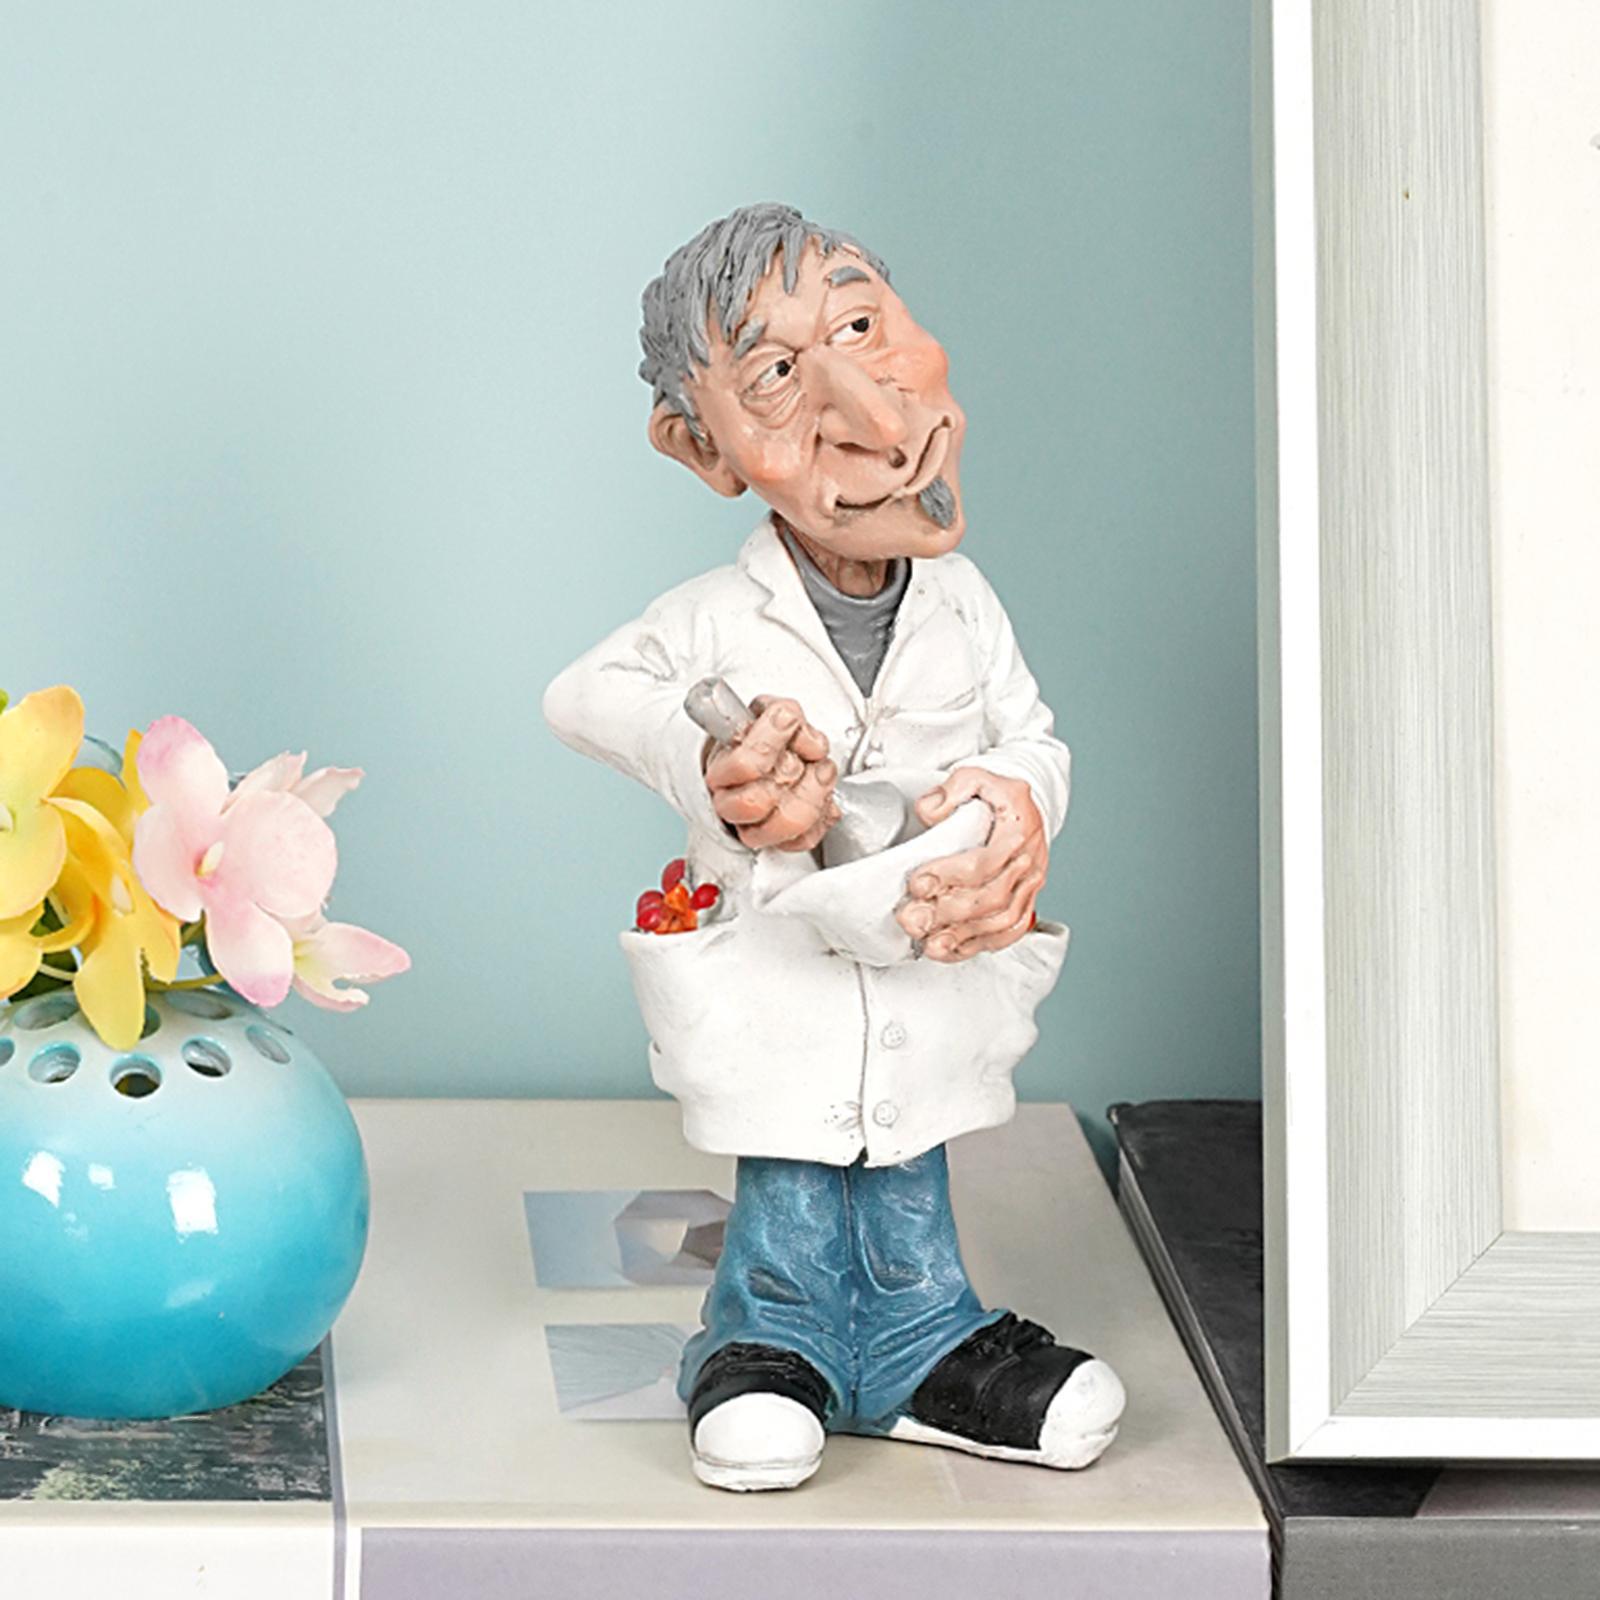 Doctor Statue Resin Figurine Crafts for Bookshelf Office Decoration